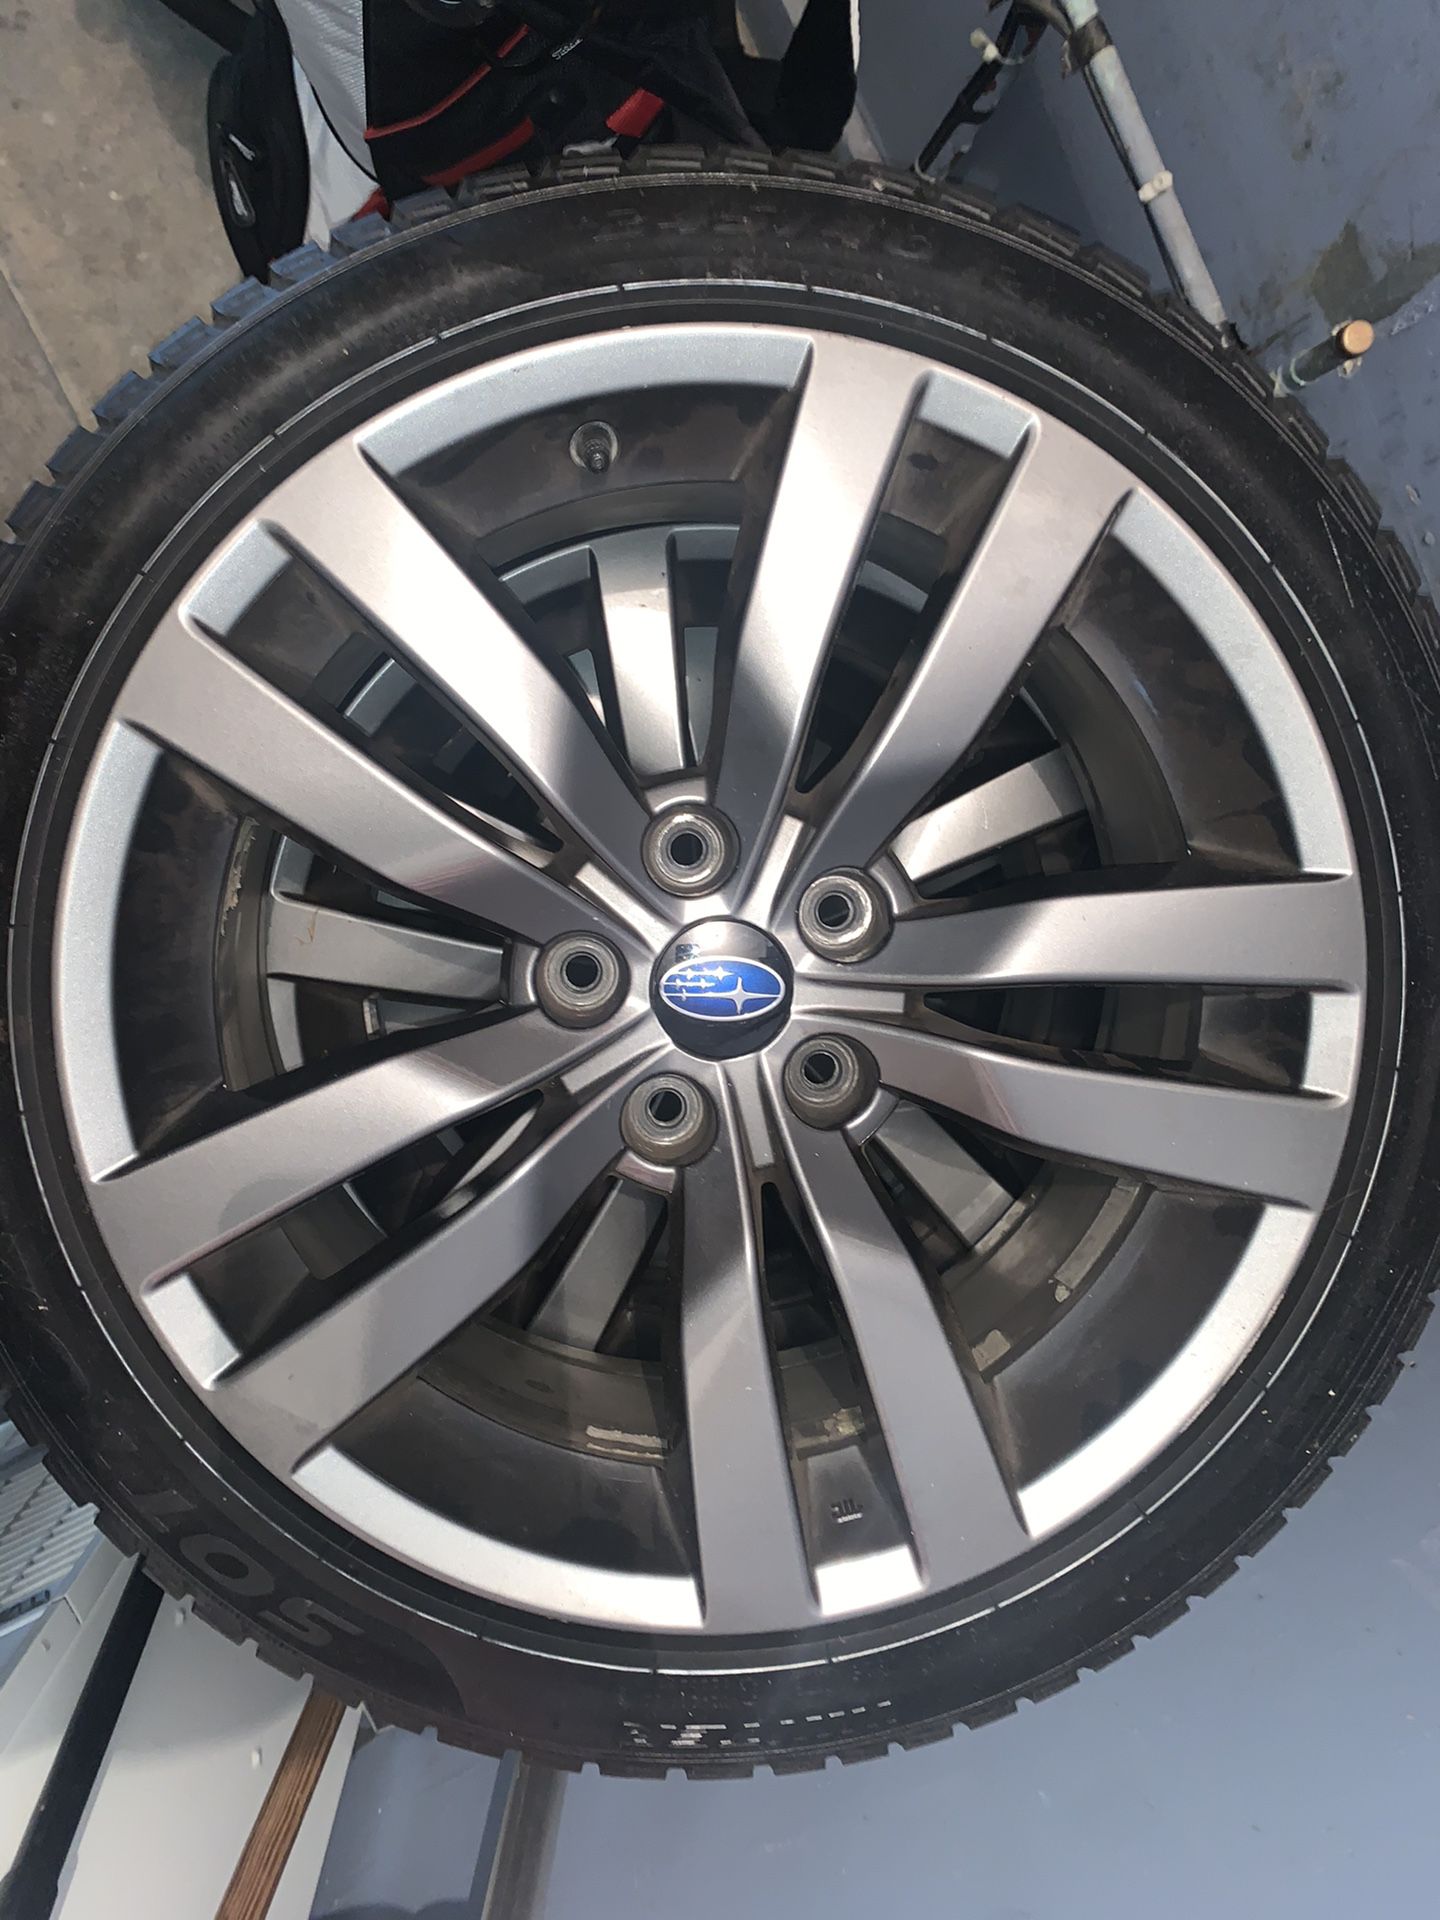 Wrx 18in wheels with Pirelli winter tires